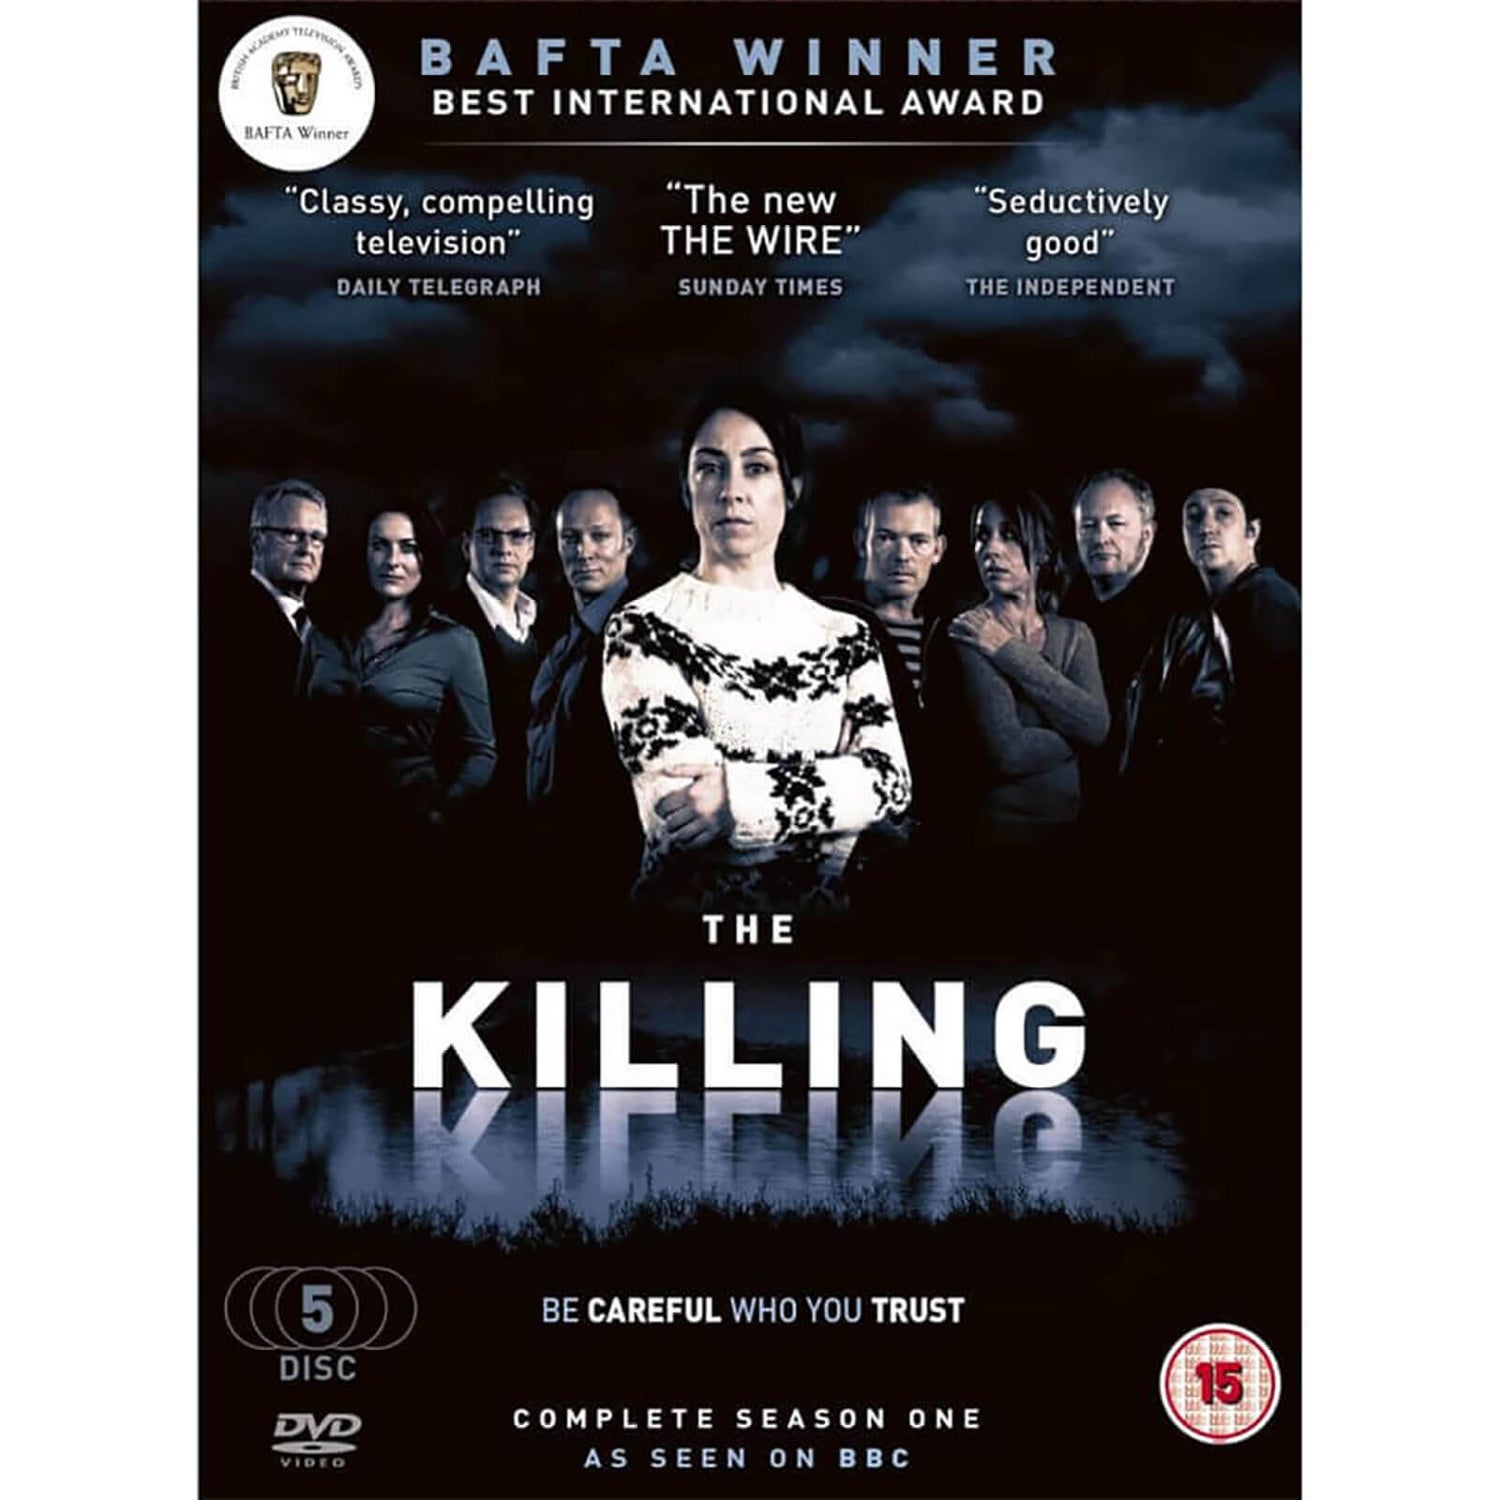 The Killing - Complete Season One